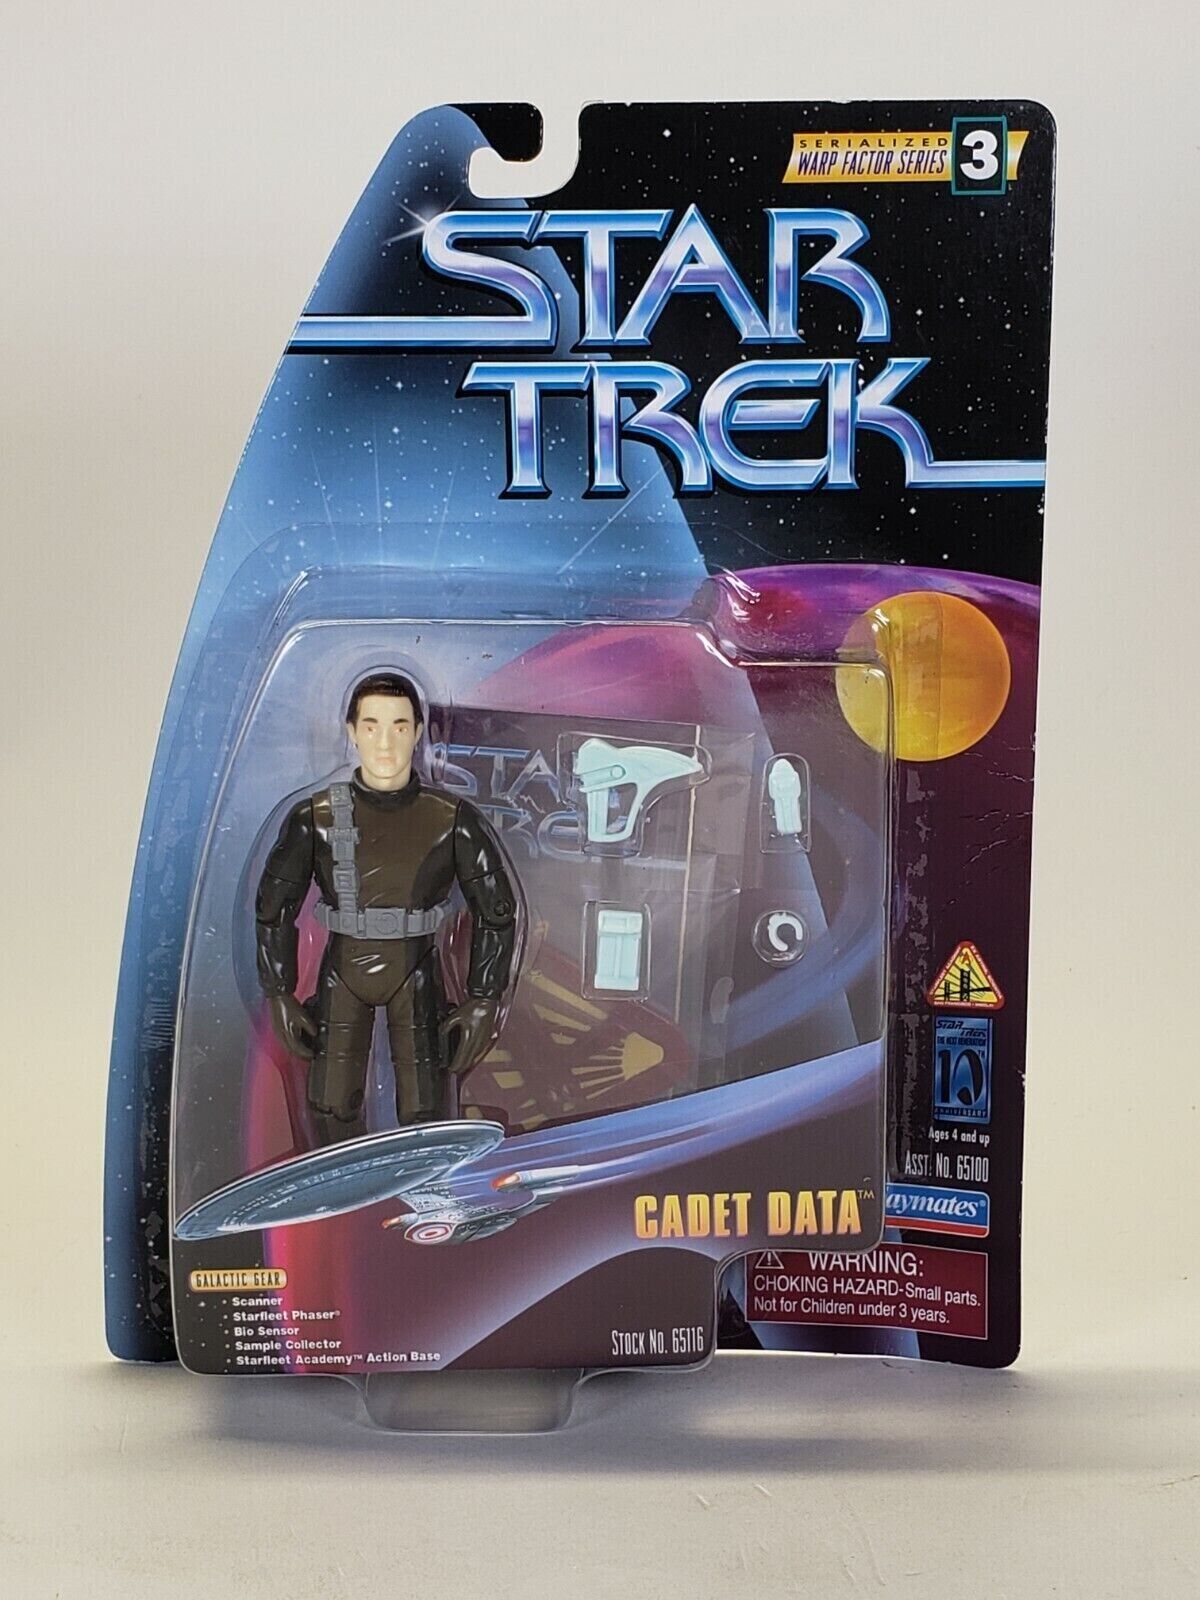 1997 Playmates Star Trek Warp Factor Series 3 Cadet Data Action Figure Toy Blue 